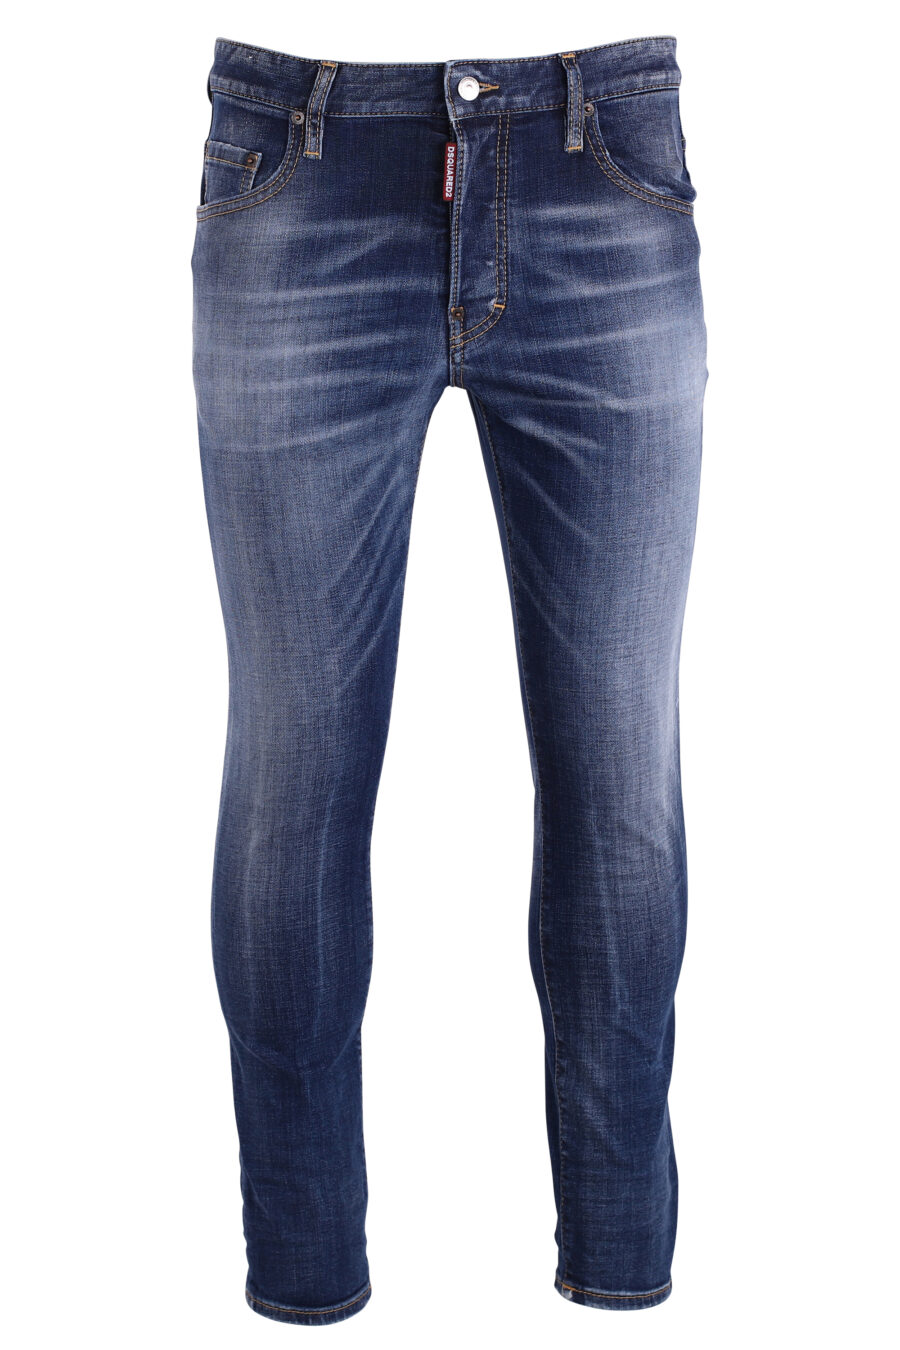 Jeans "Skaterjeans" blau getragen - IMG 8990